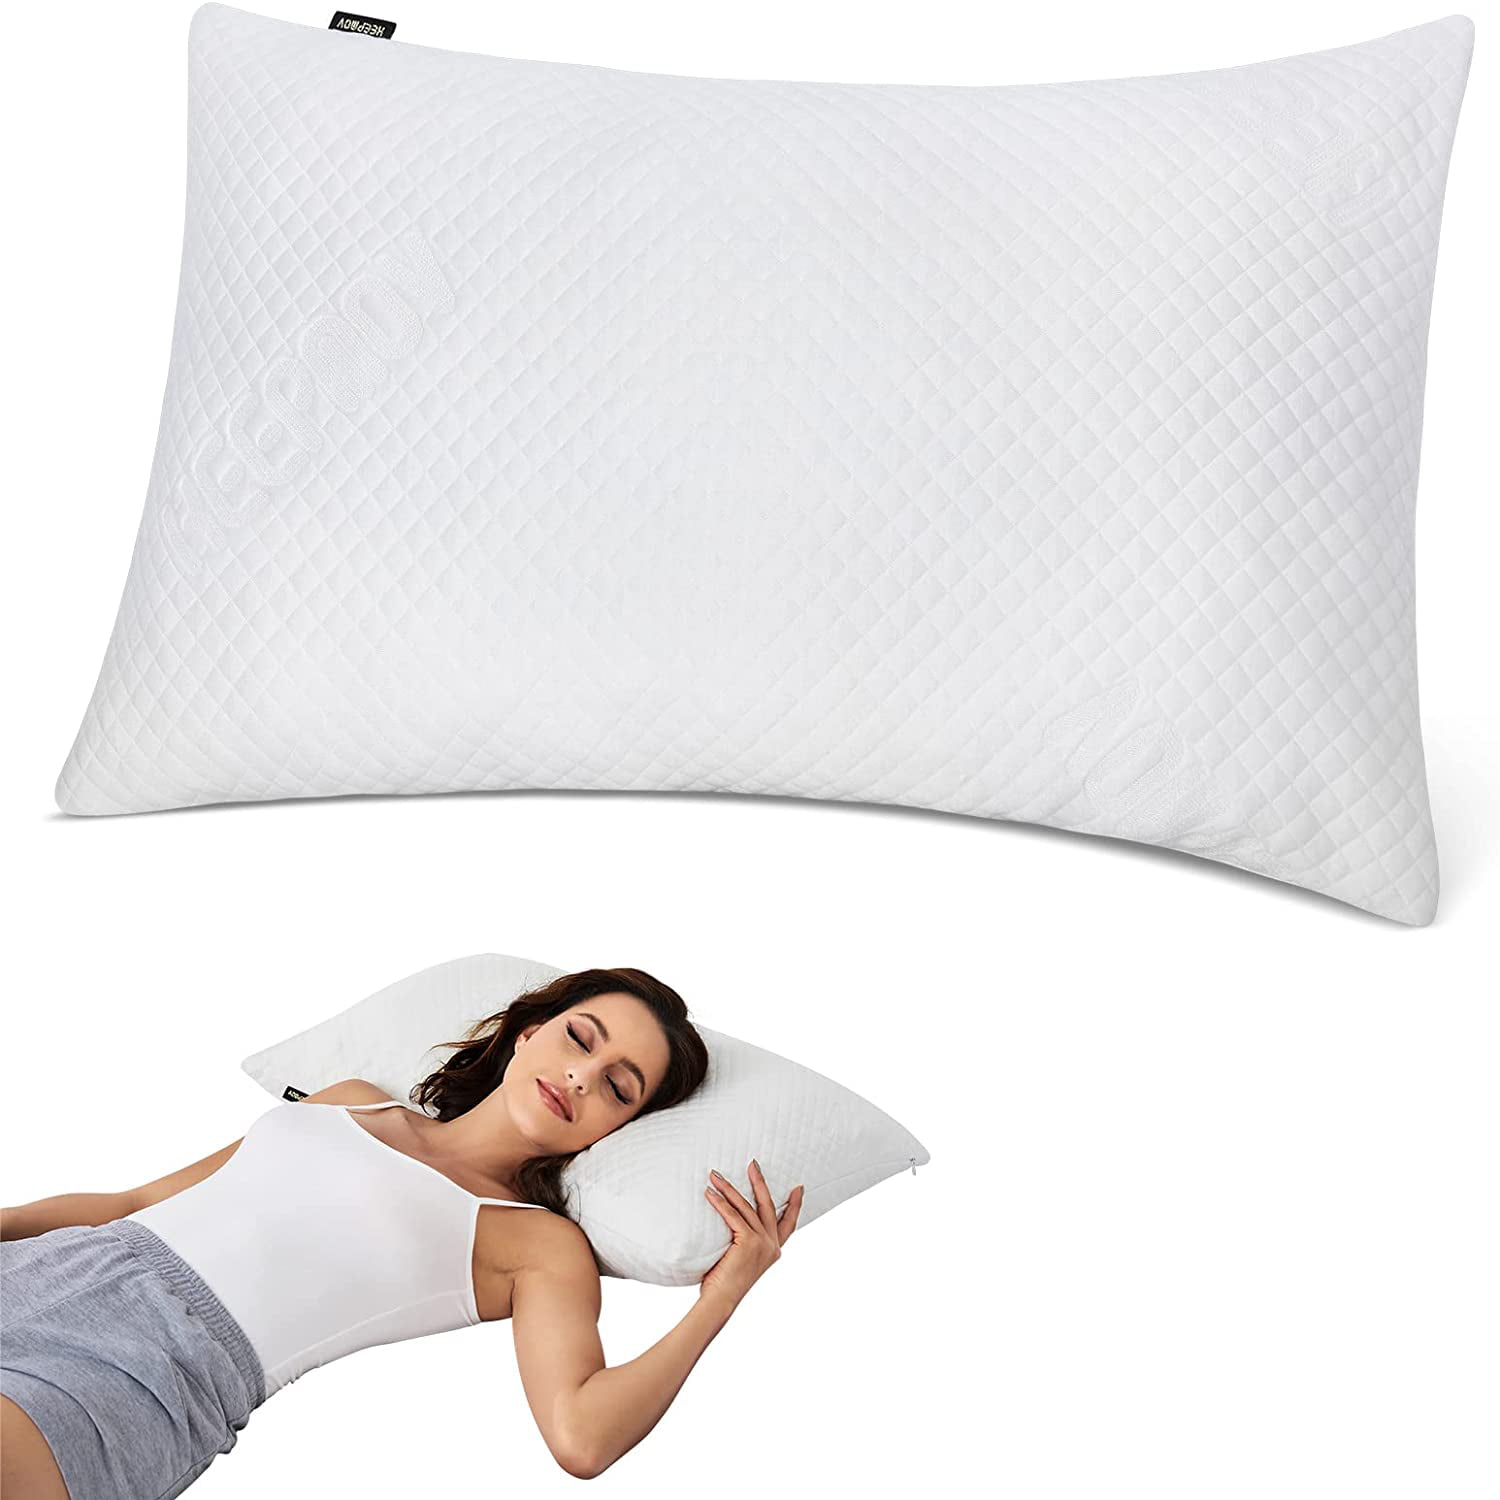 Comfort Memory Foam Sleep Bed Pillows Gel Fiber Hotel Shredded Bamboo Carry Bags 